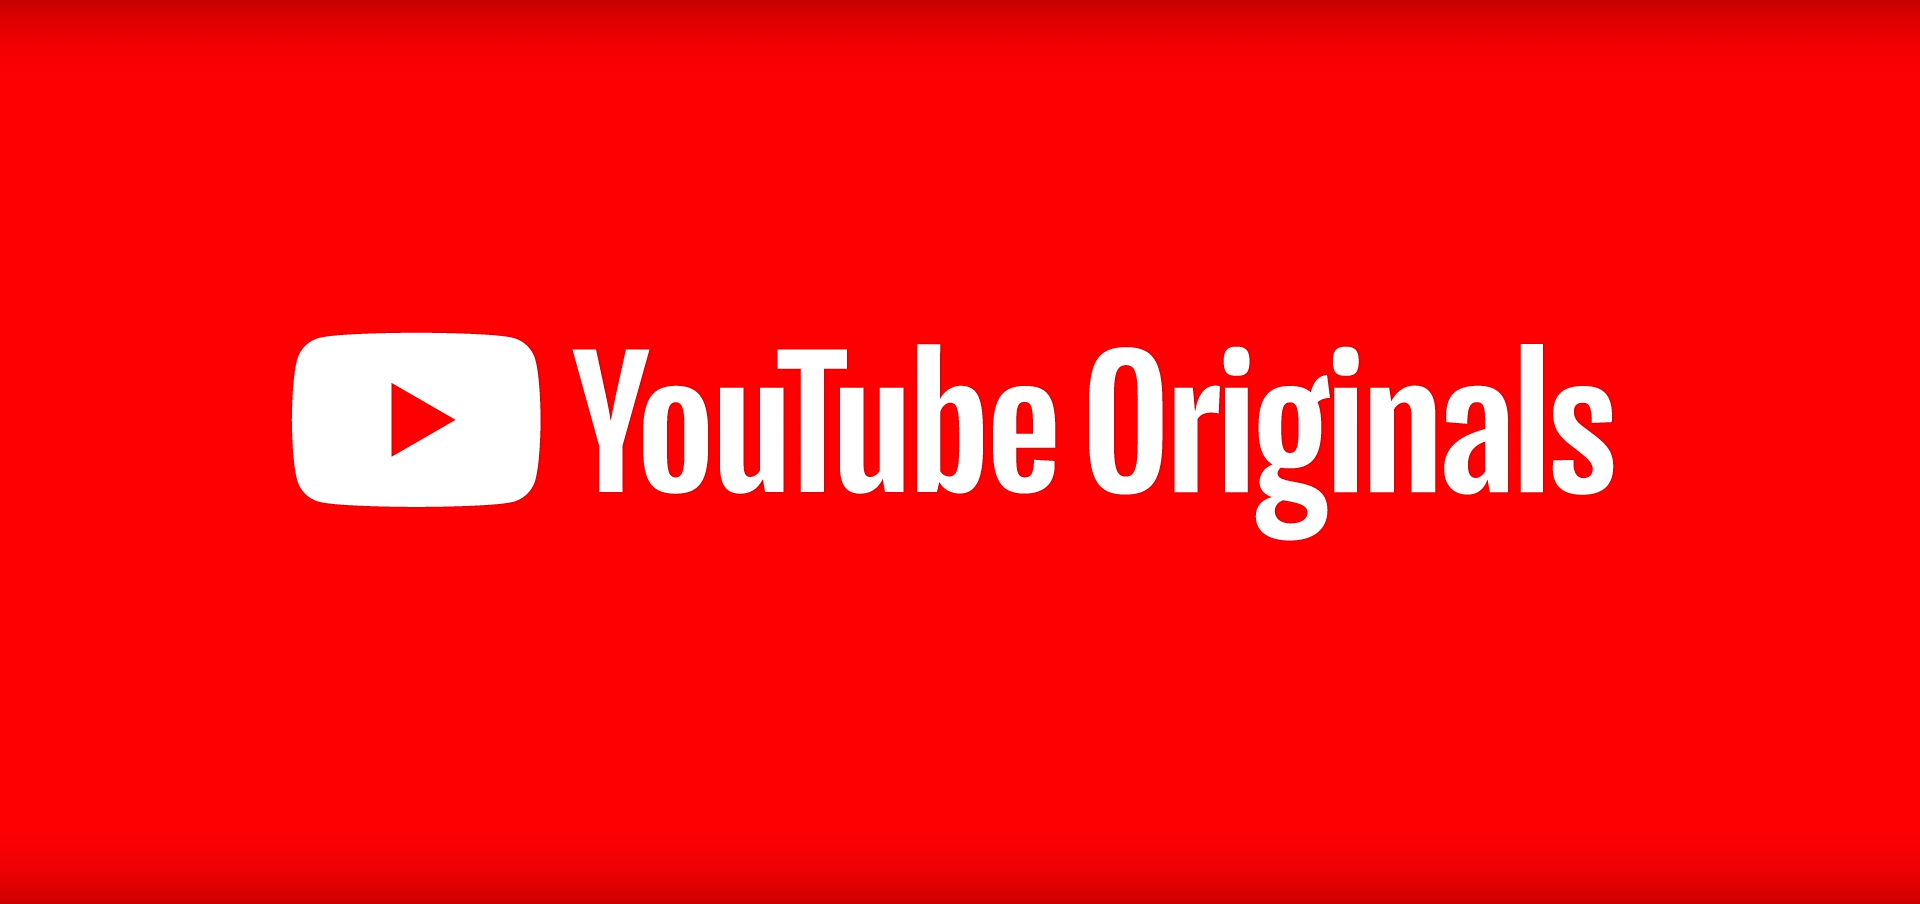 YouTube Original Logo - File:Logo of YouTube Originals.png - Wikimedia Commons